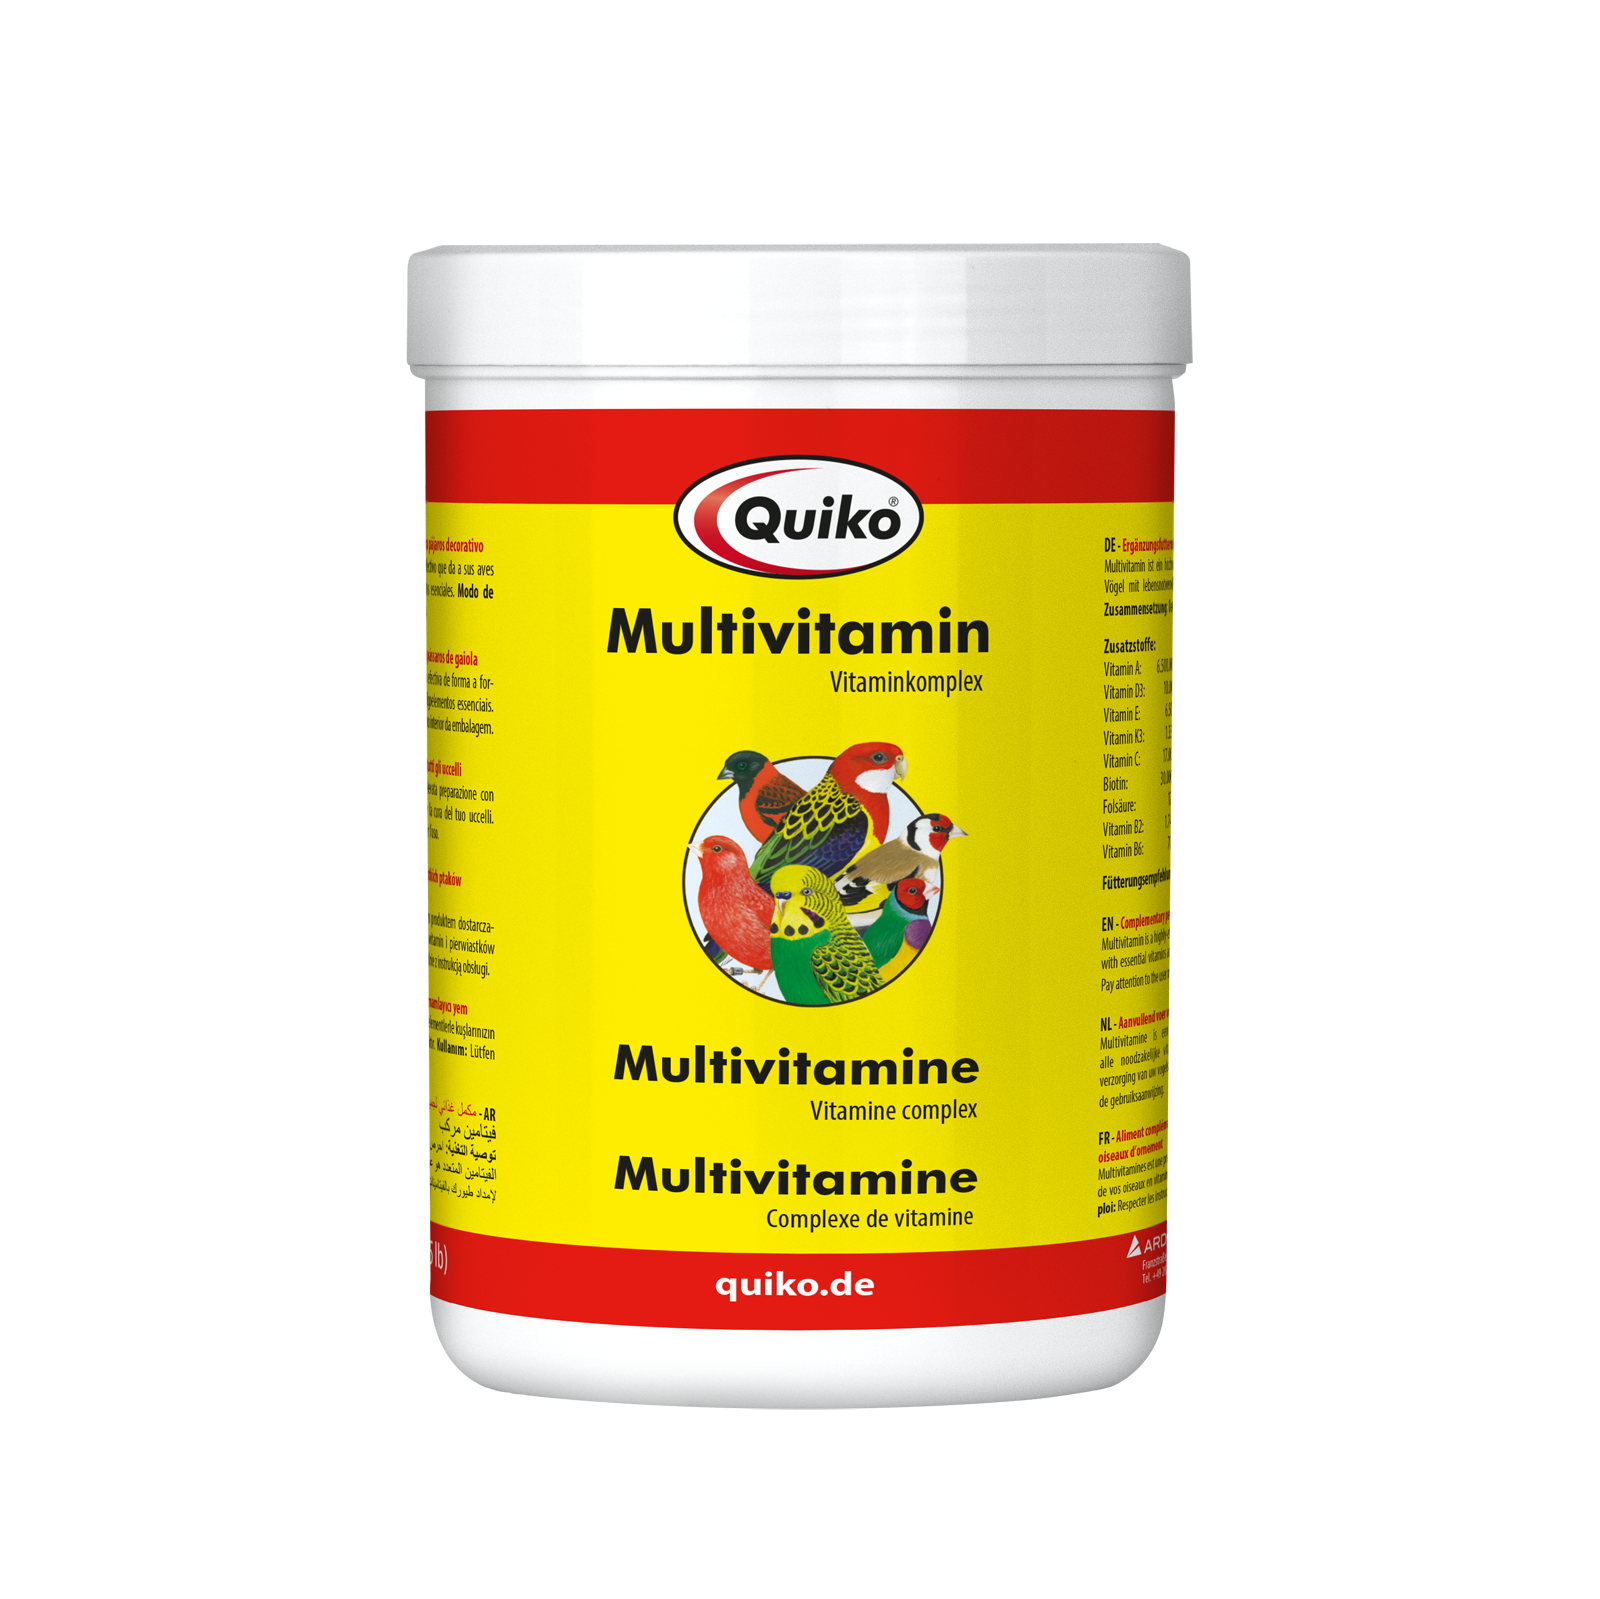 Quiko Multivitamin: Supplementary feed for vitamin supply of ornamental birds